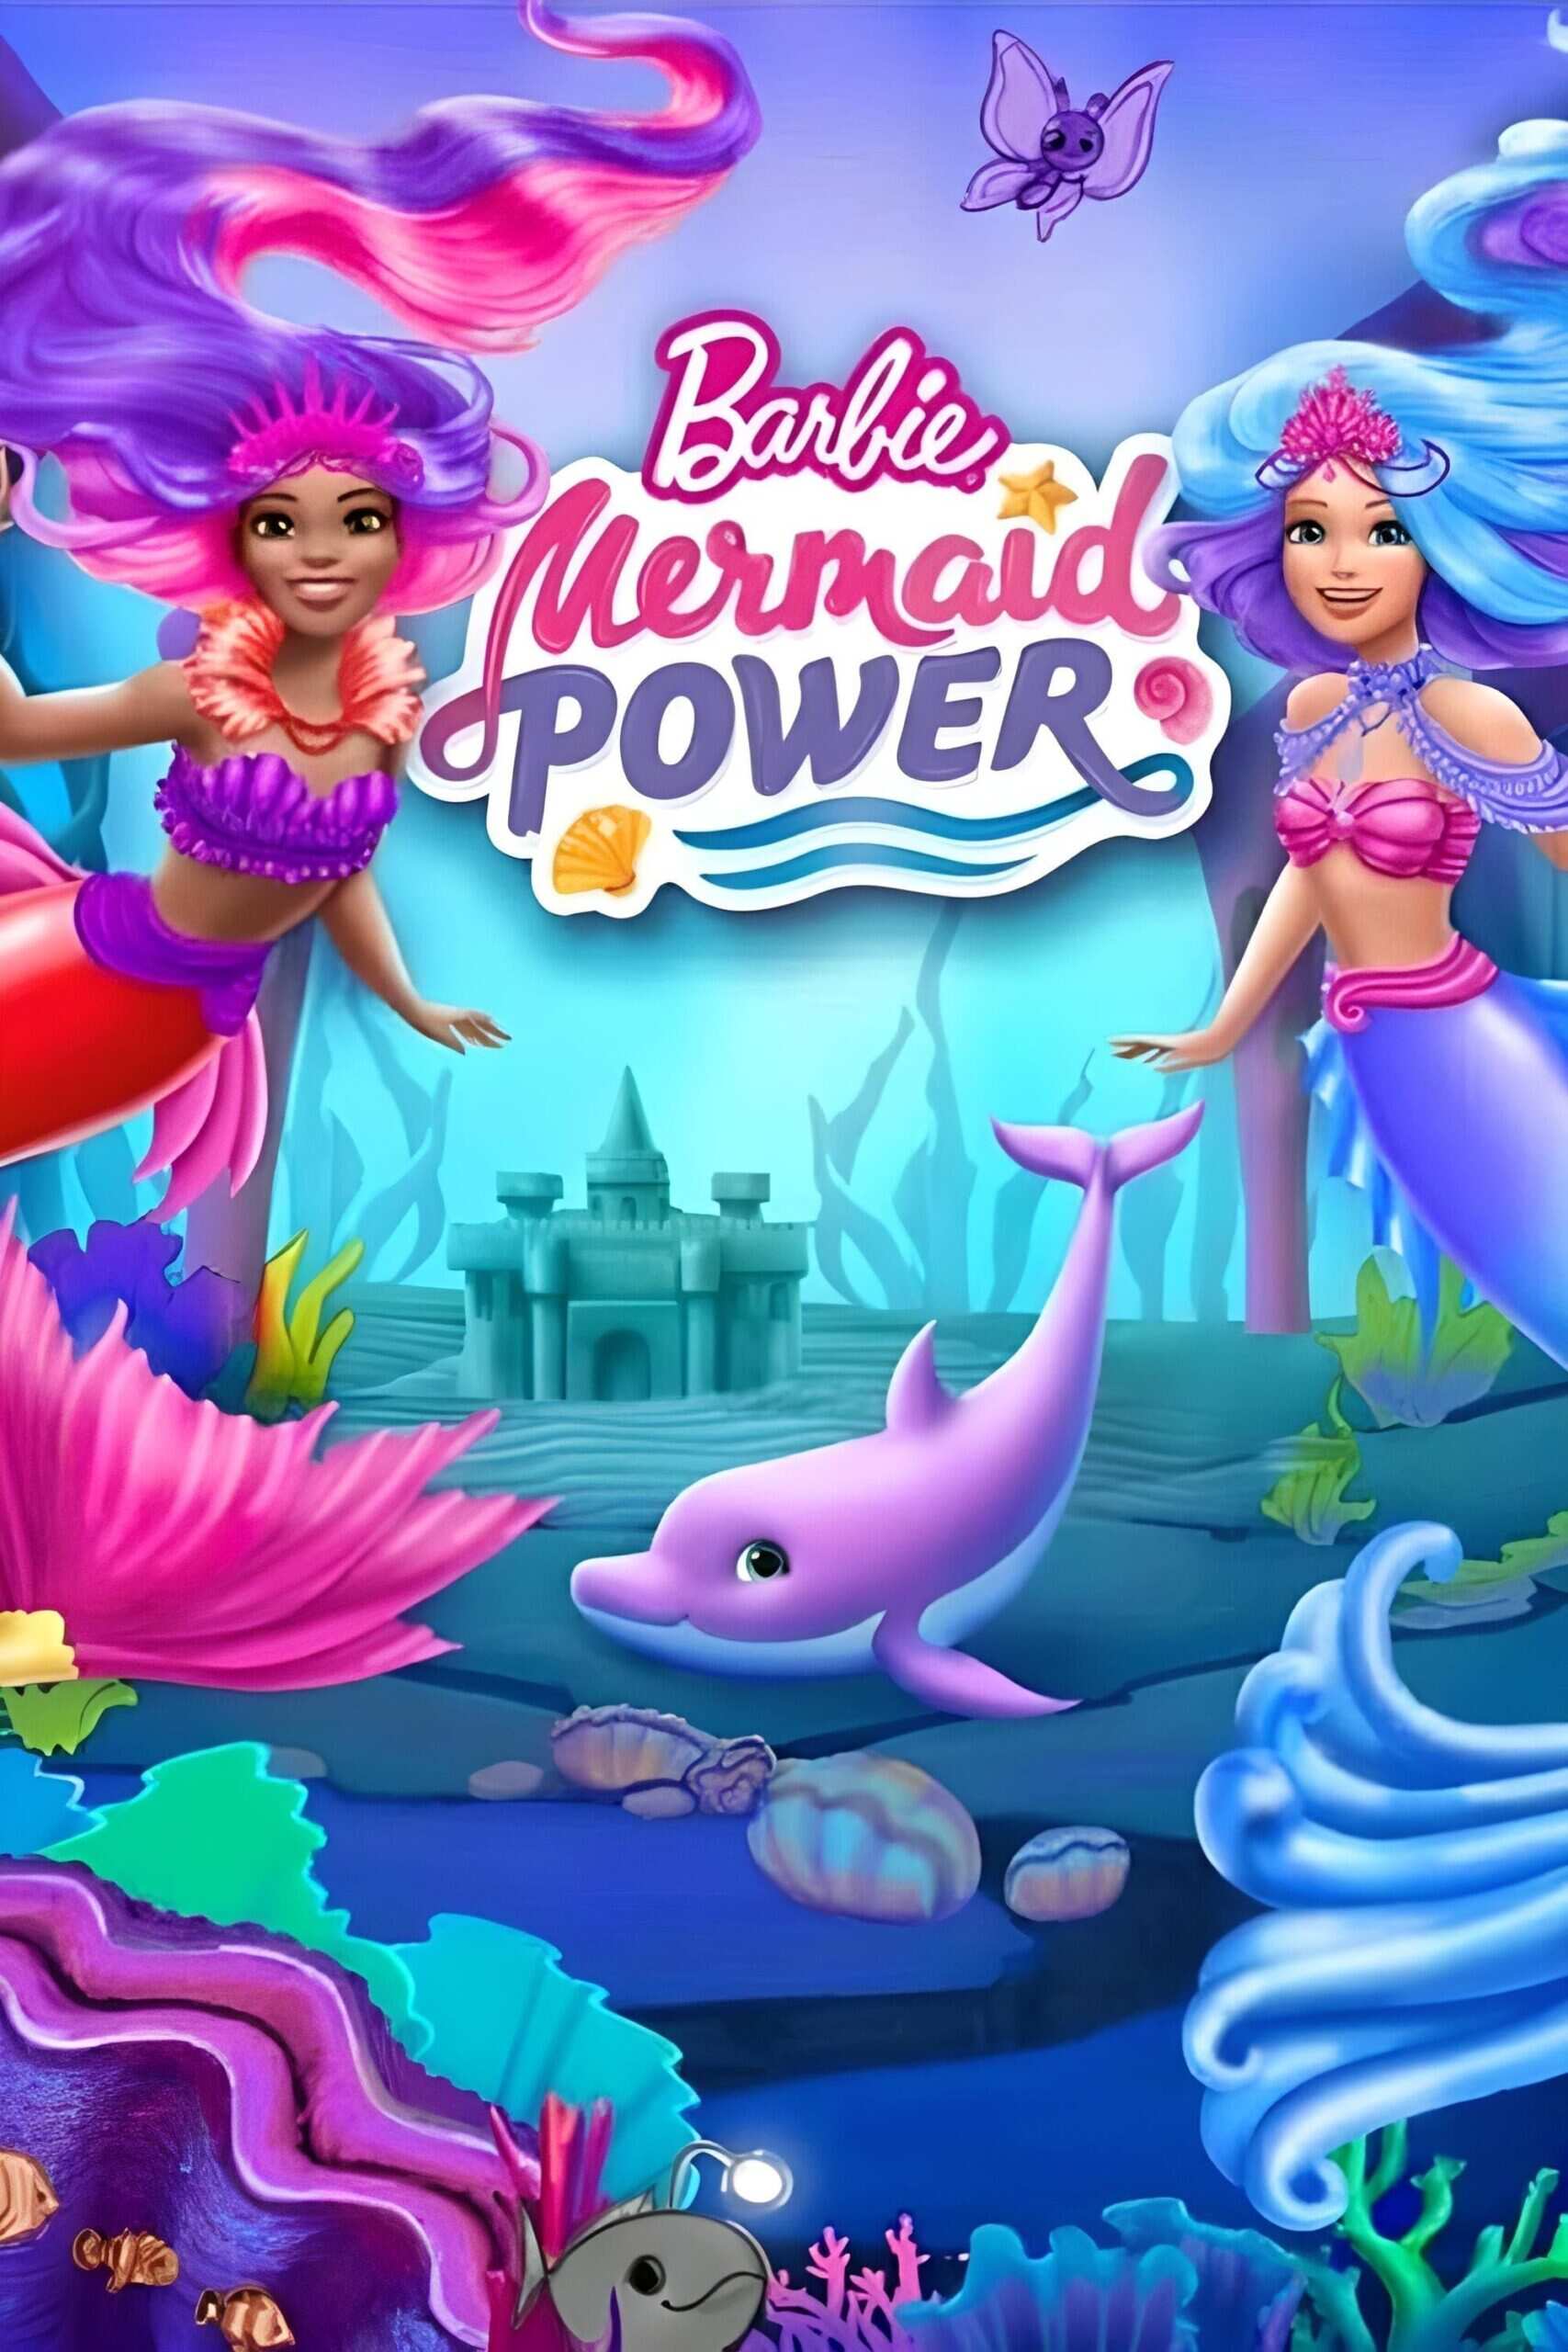 Barbie mermaid power watch online ott streaming of movie on netflix